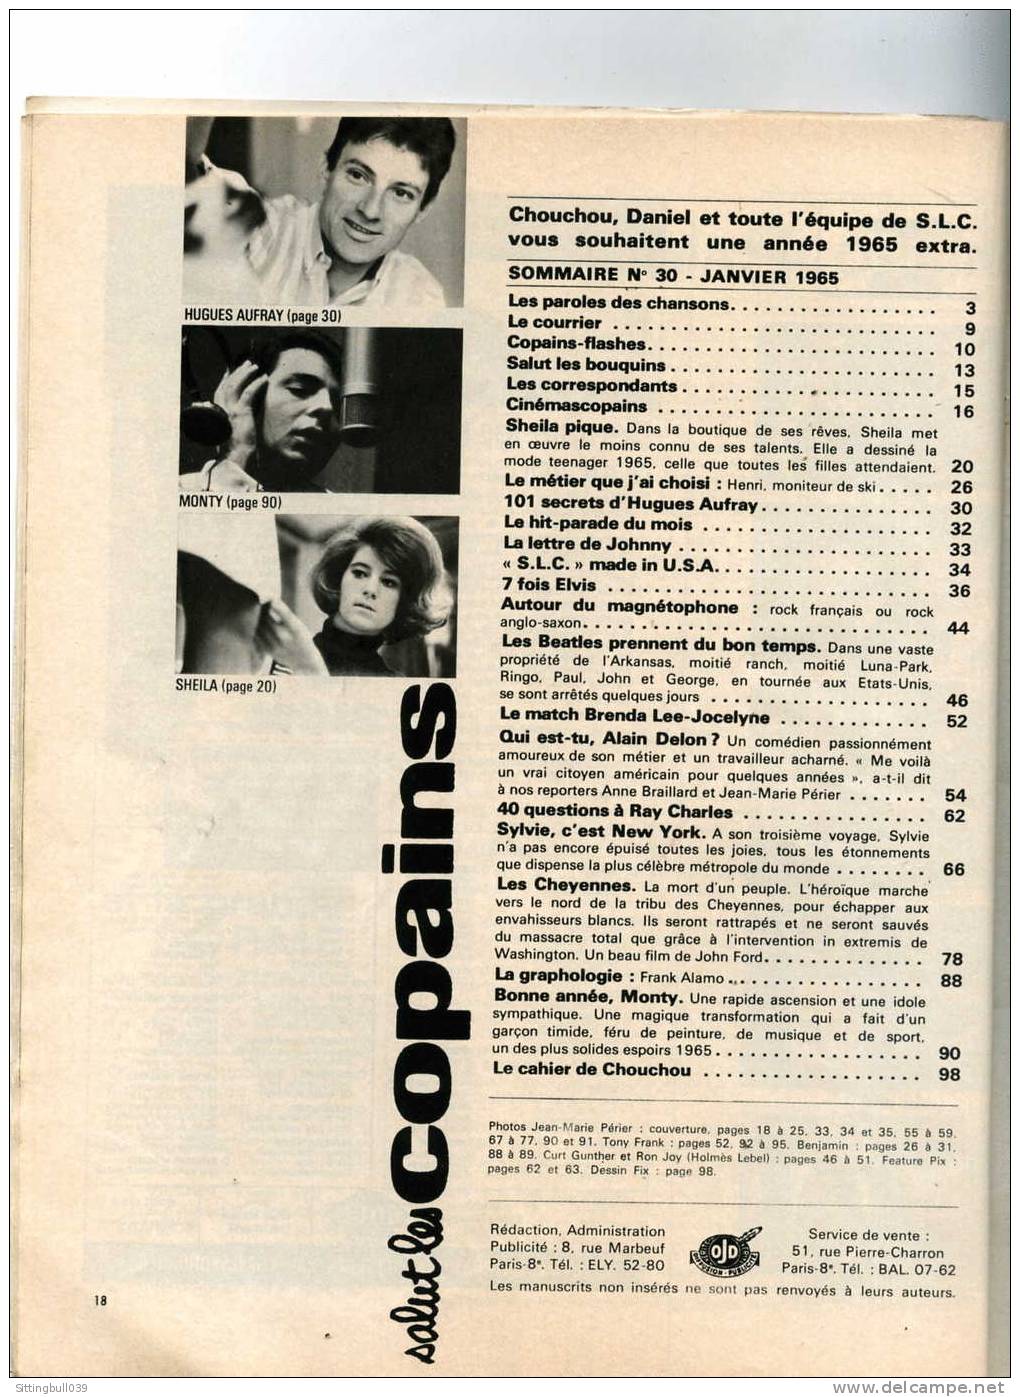 SALUT LES COPAINS N° 30 (SLC) JANV. 1965. SYLVIE VARTAN, LES BEATLES, ELVIS, ALAIN DELON, Etc. SUPERBES PHOTOS. - Muziek